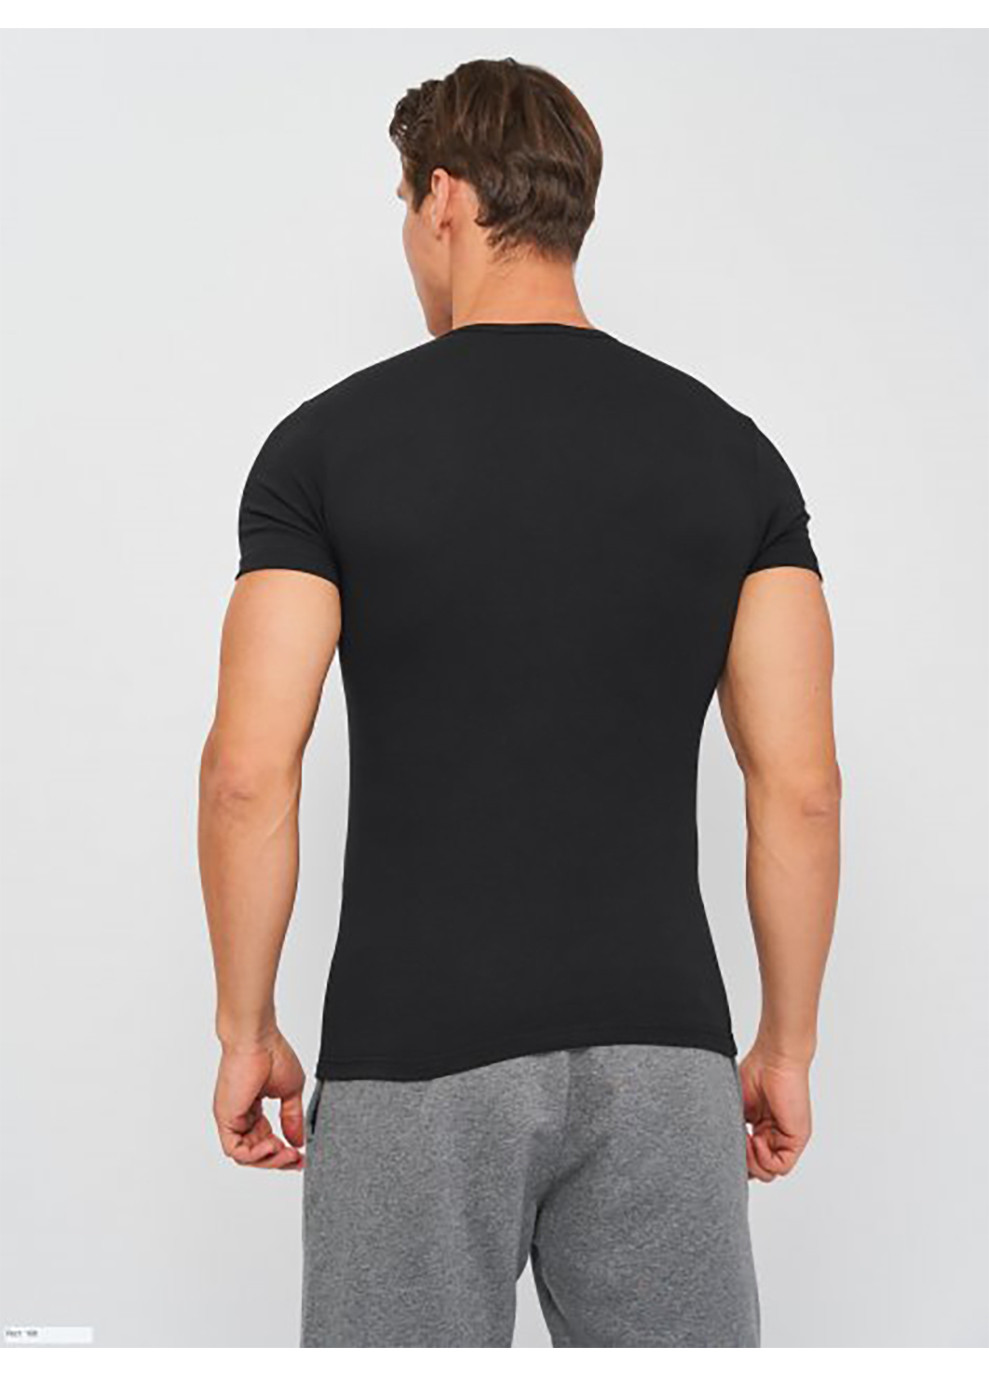 Черная футболка t-shirt mezza manica girocollo черный l муж k1305 nero-l Kappa